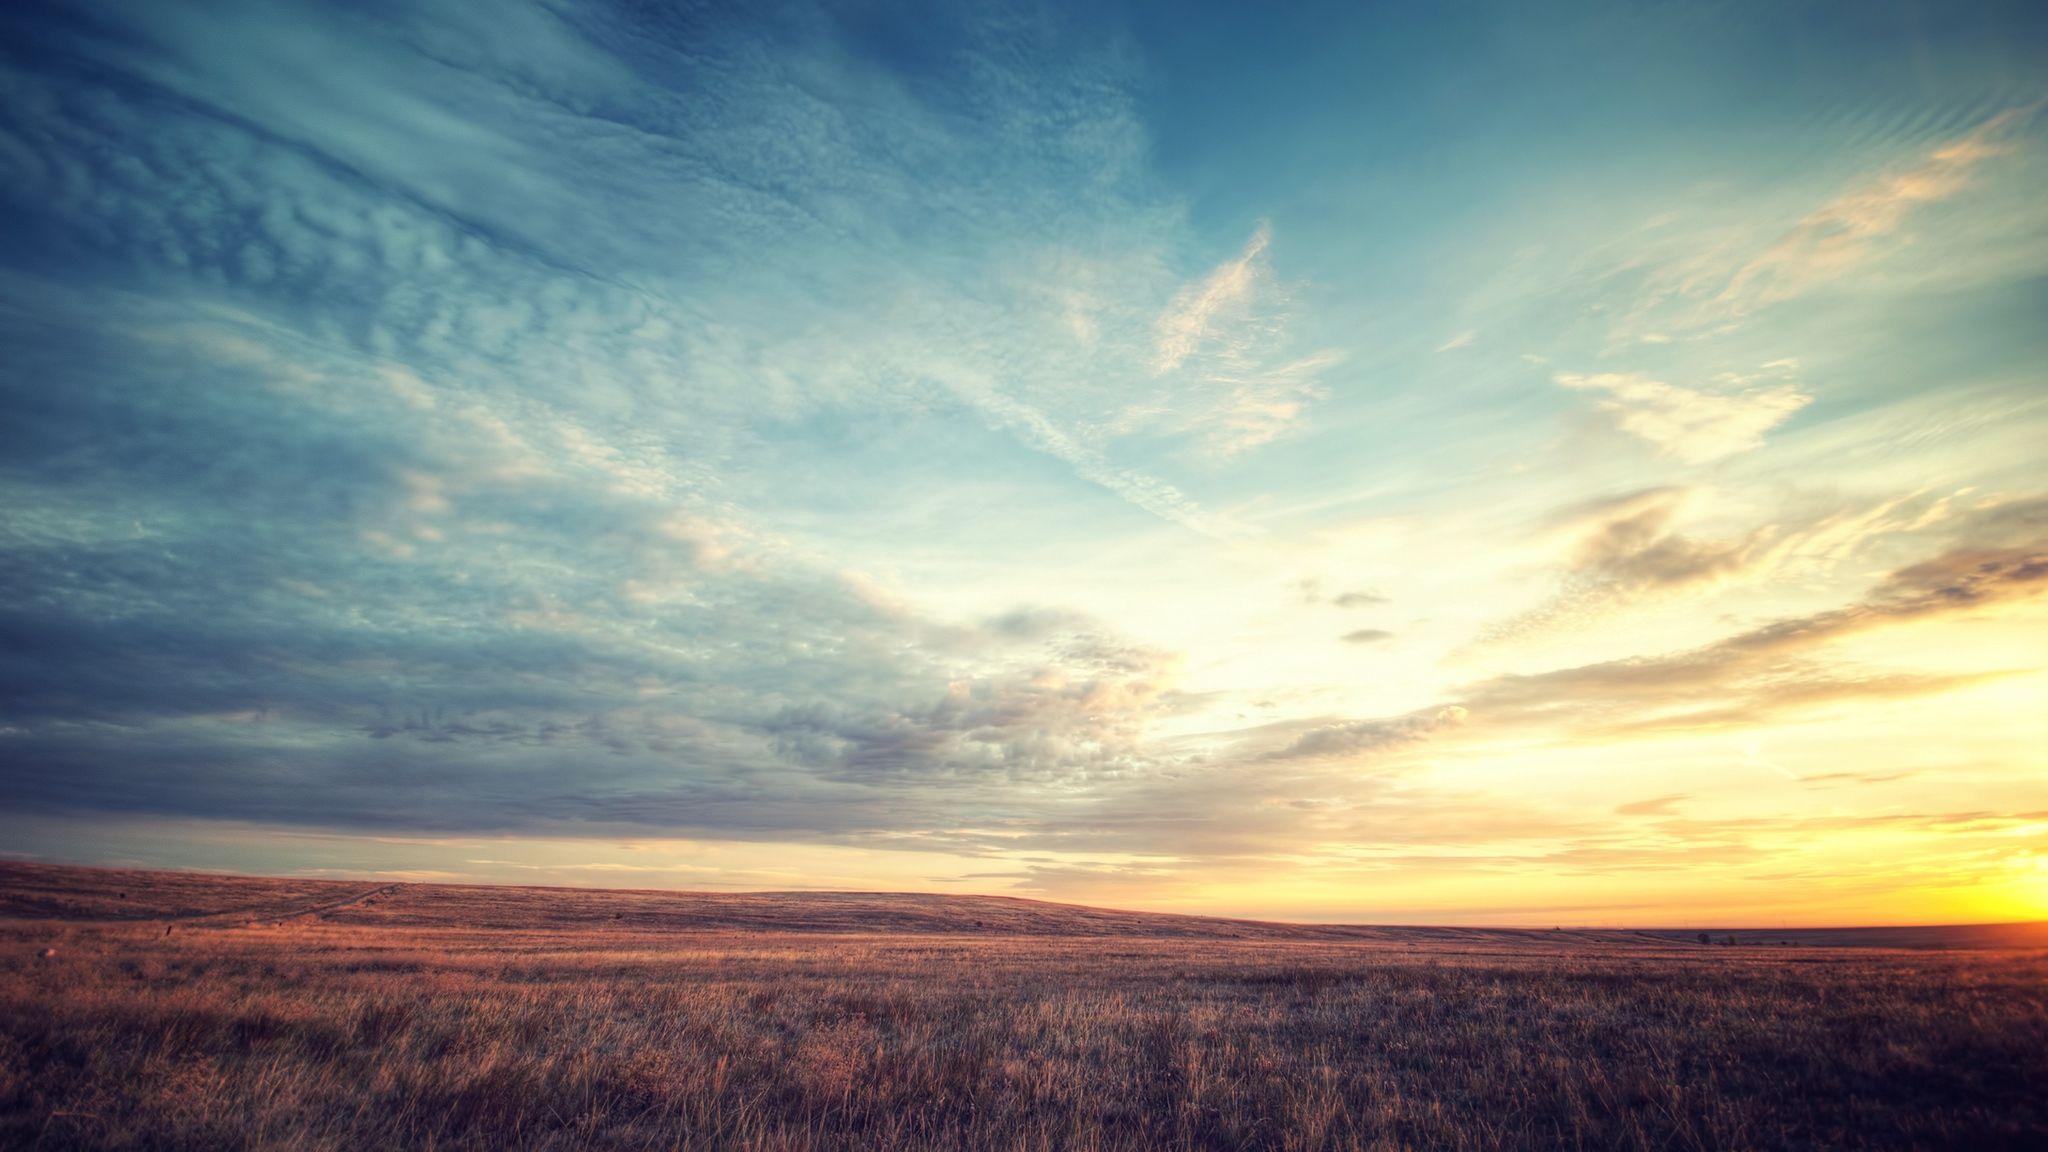 Download wallpaper 2048x1152 field, dawn, sky, beautiful scenery